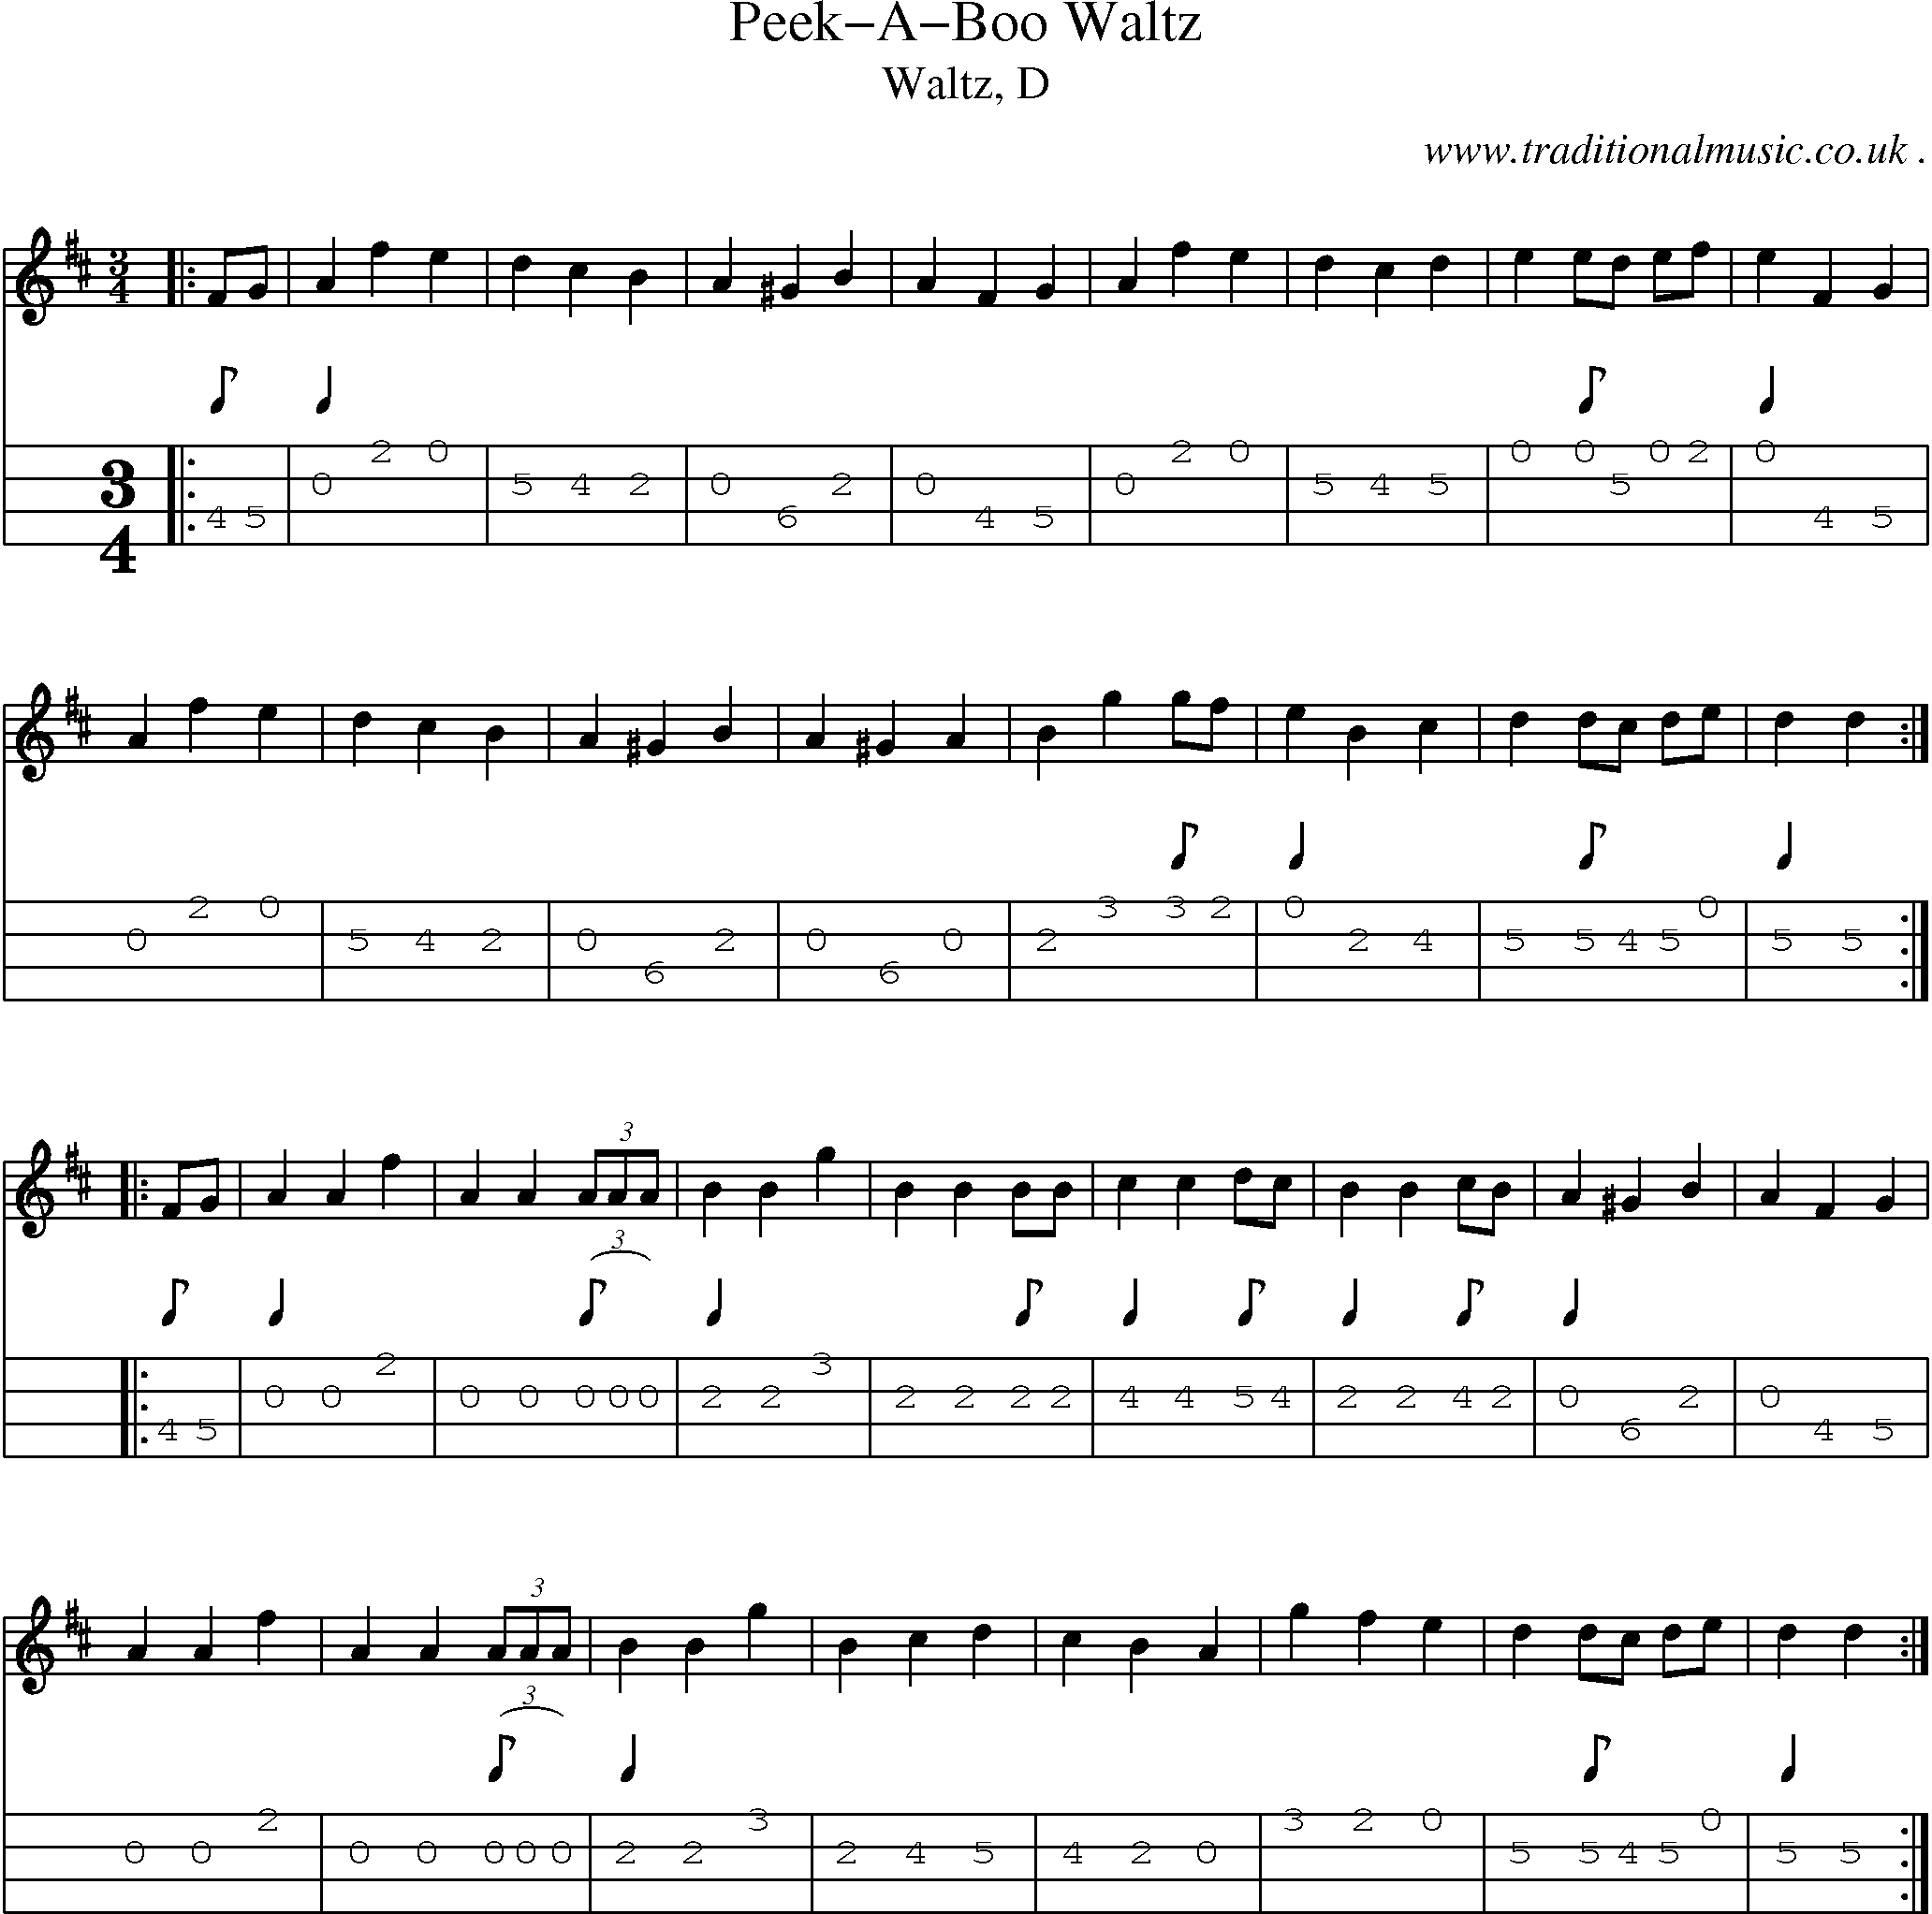 Sheet-music  score, Chords and Mandolin Tabs for Peek-a-boo Waltz